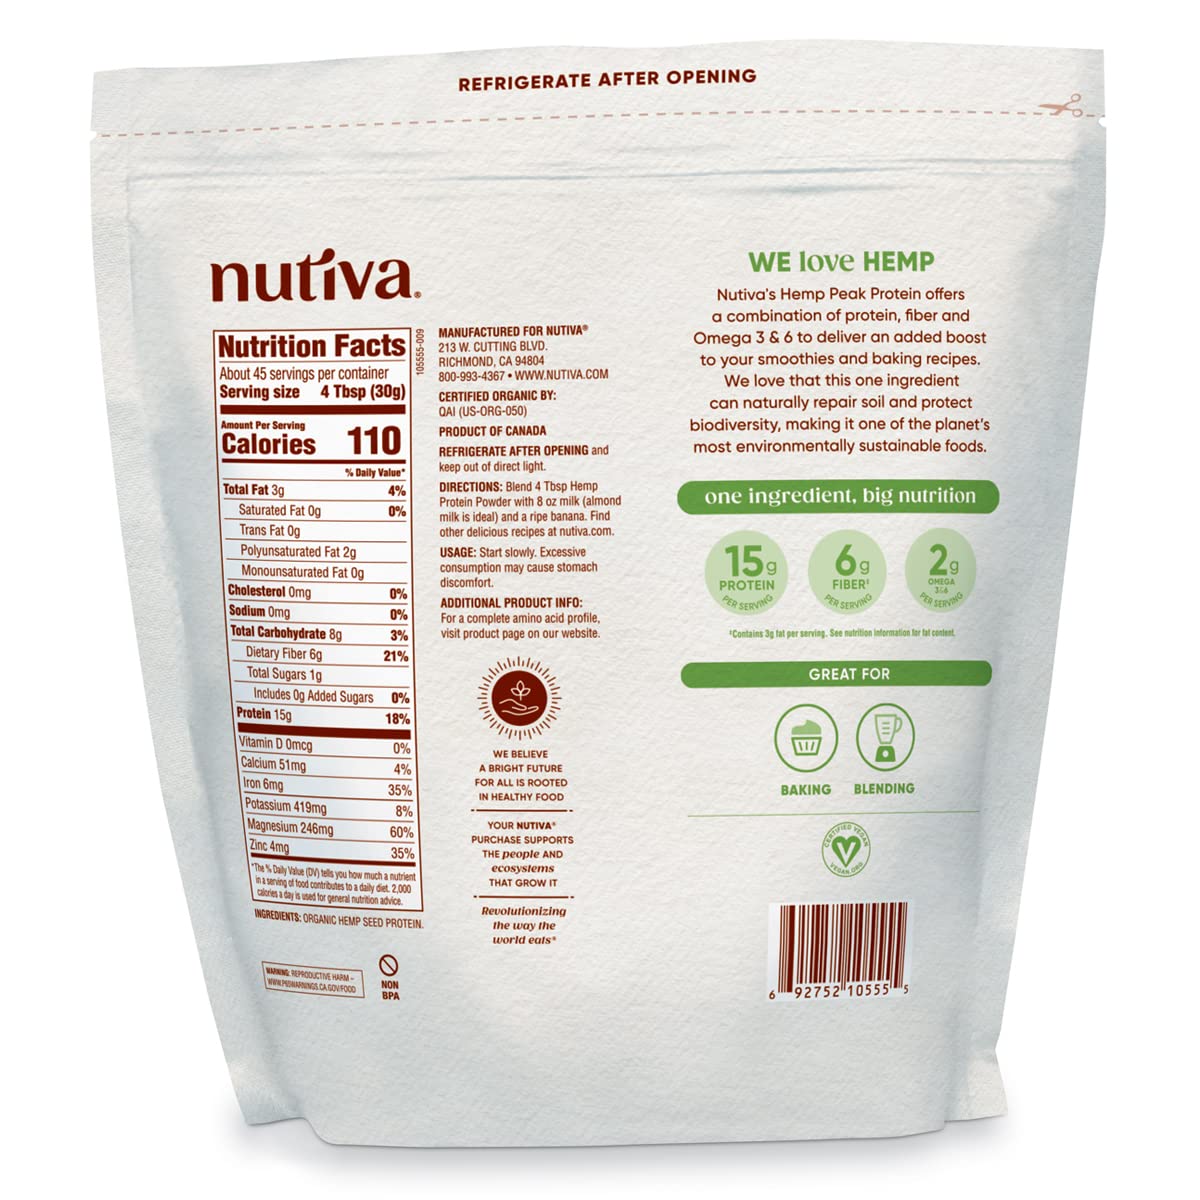 Nutiva Organic Cold-Pressed Raw Hemp Seed Protein Powder, Peak Protein, 3 Pound, USDA Organic, Non-GMO, Whole 30 Approved, Vegan, Gluten-Free & Keto, Plant Protein with Essential Amino Acids : Health & Household